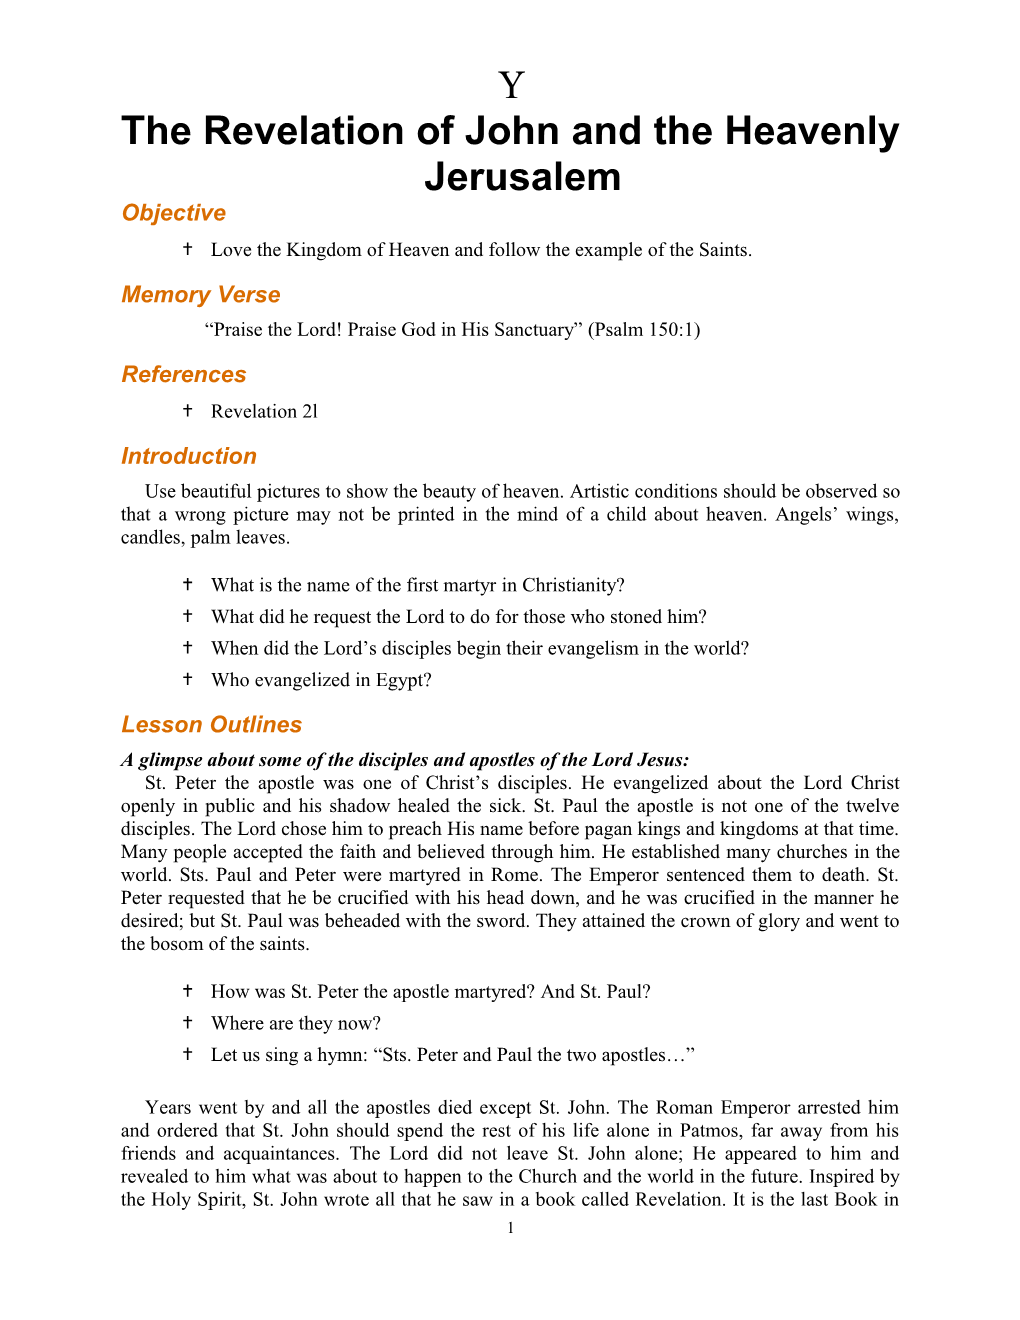 The Revelation of John and Heavenly Jerusalem